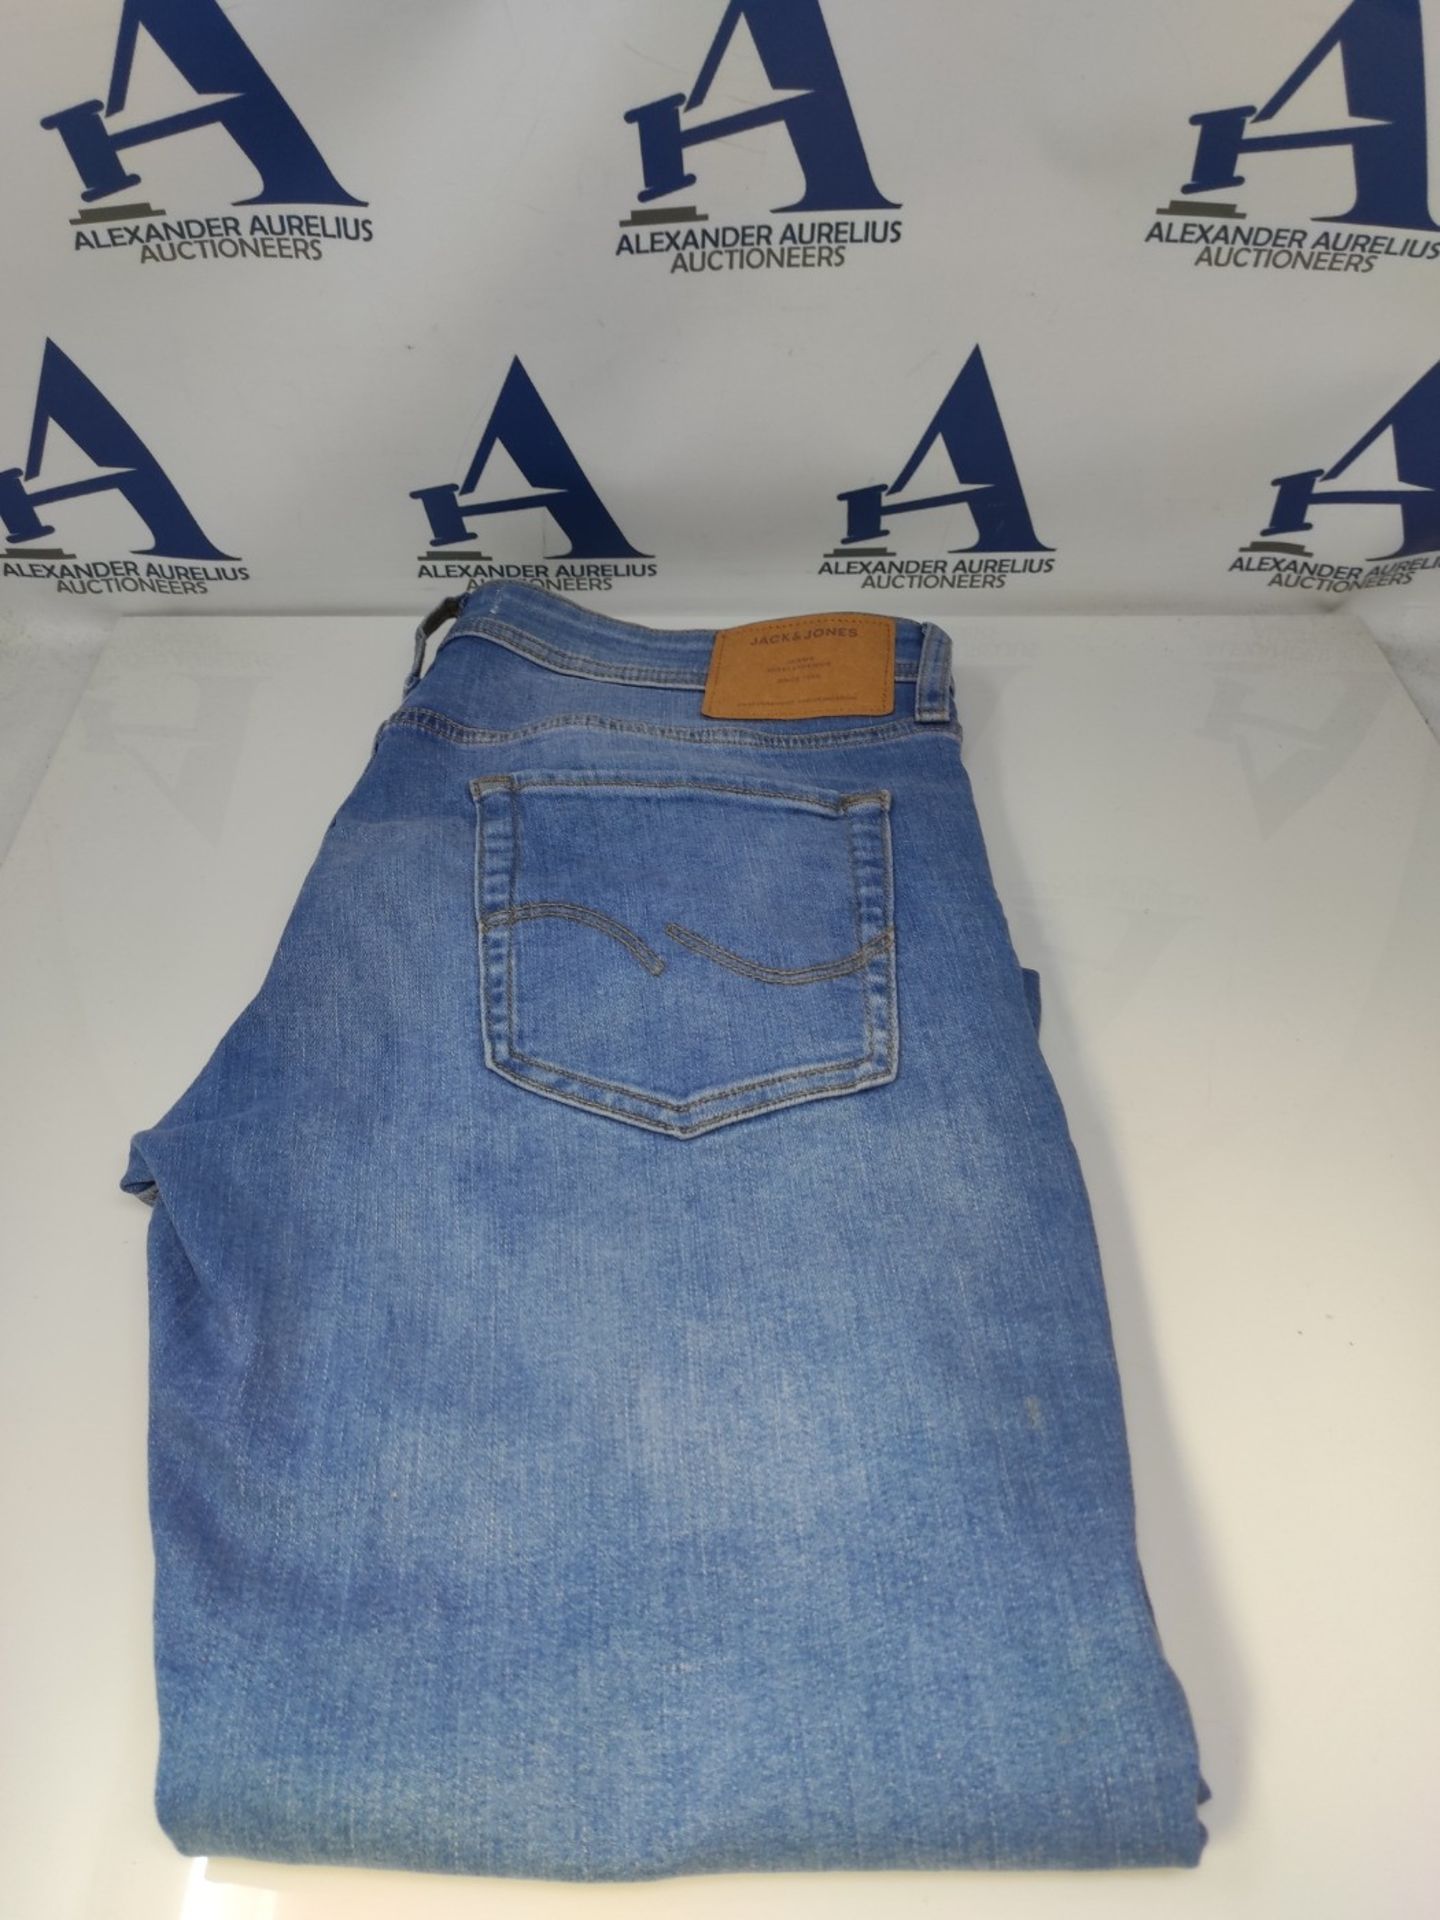 JACK & JONES Men's Slim Fit Jeans Glenn Original SBD 805, Denim Blue, 32W x 32L - Image 2 of 3